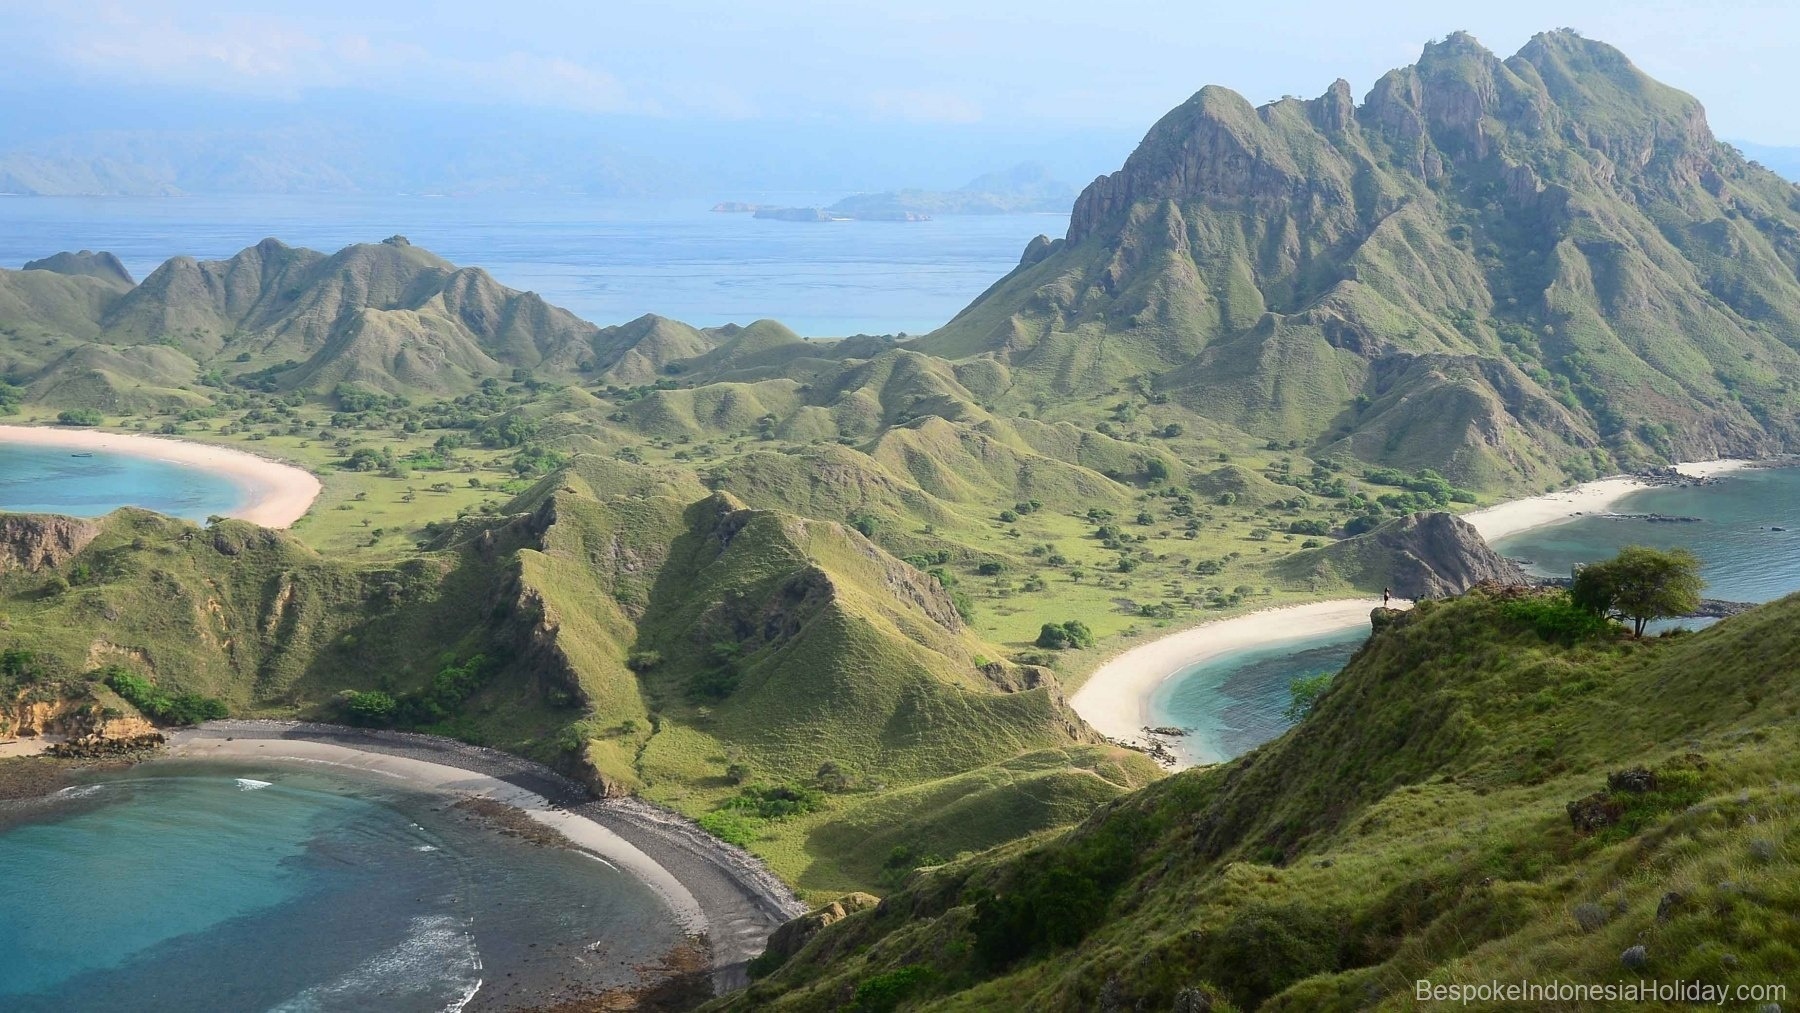 A view of the mountainous green archipelago and sandy sea bays. Padar Island | Komodo Tour | Bespoke Indonesia Holiday.